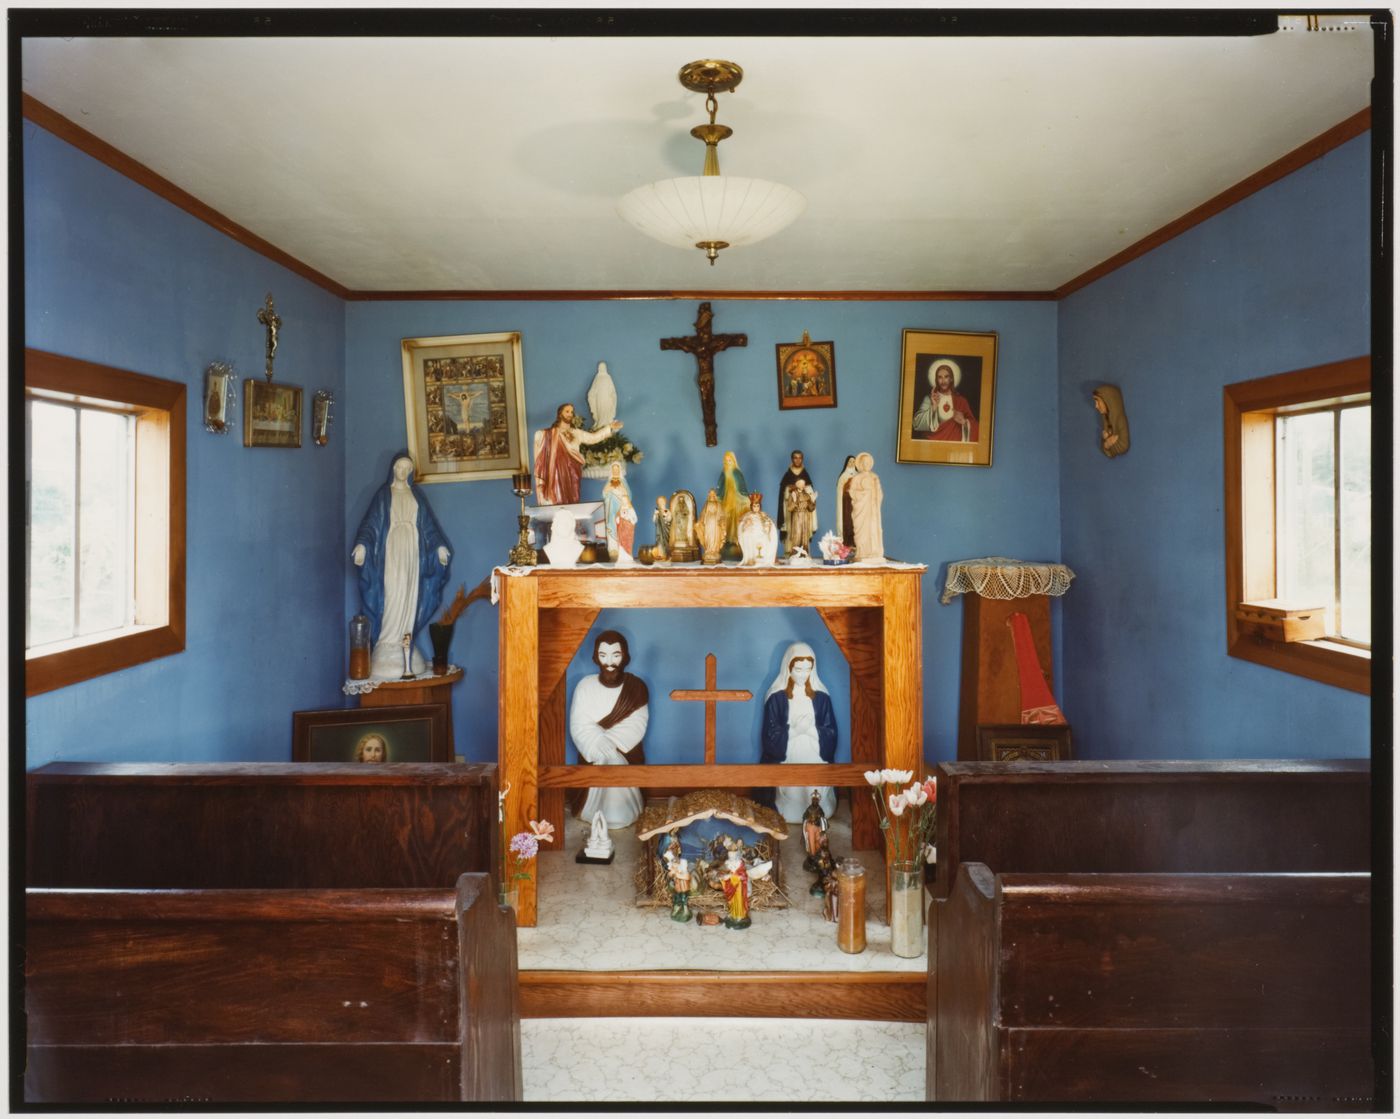 Home-made Chapel, Vacherie, Louisiana